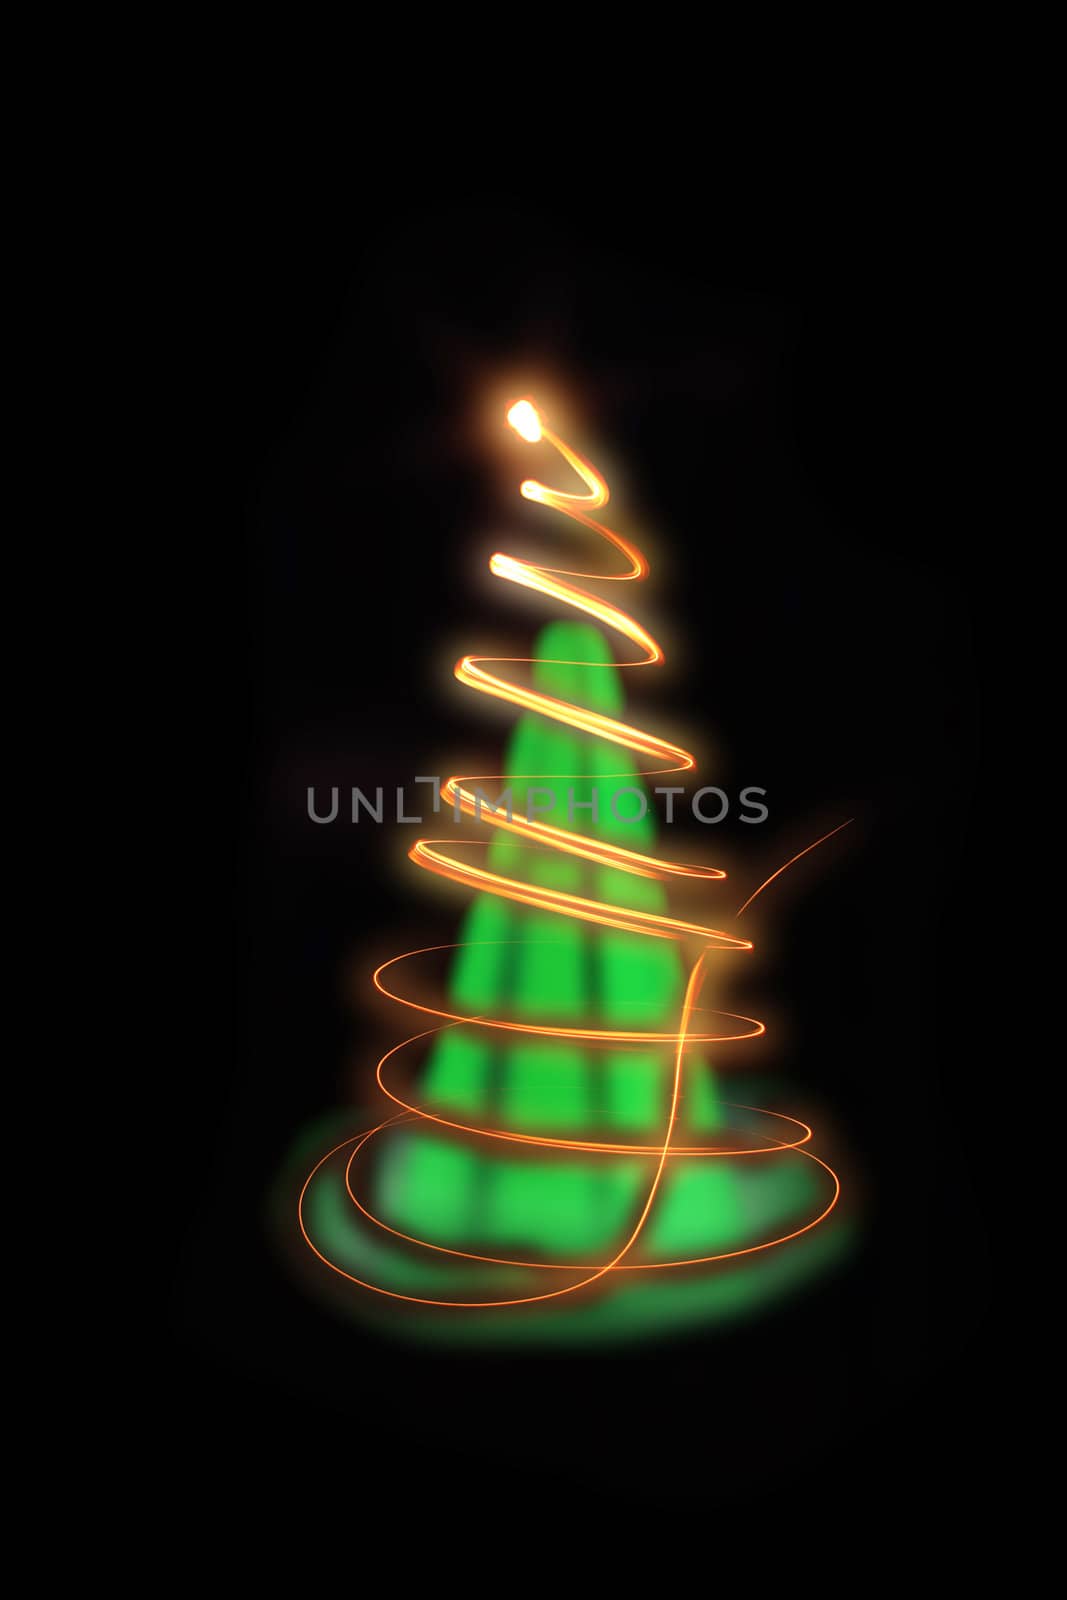 xmas tree (lights) on the black background